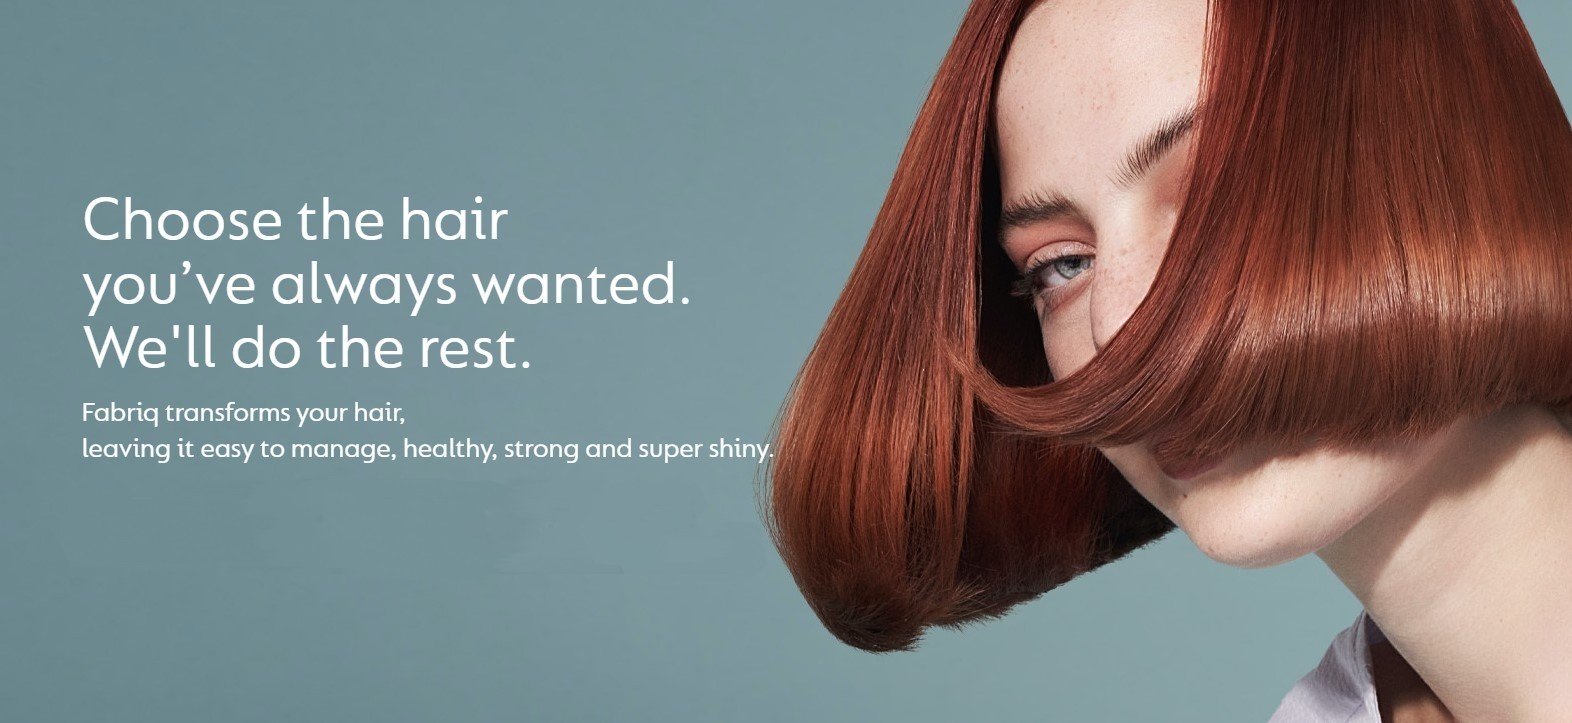 Fabriq vegan keratin hair treatments Cardiff hair salon